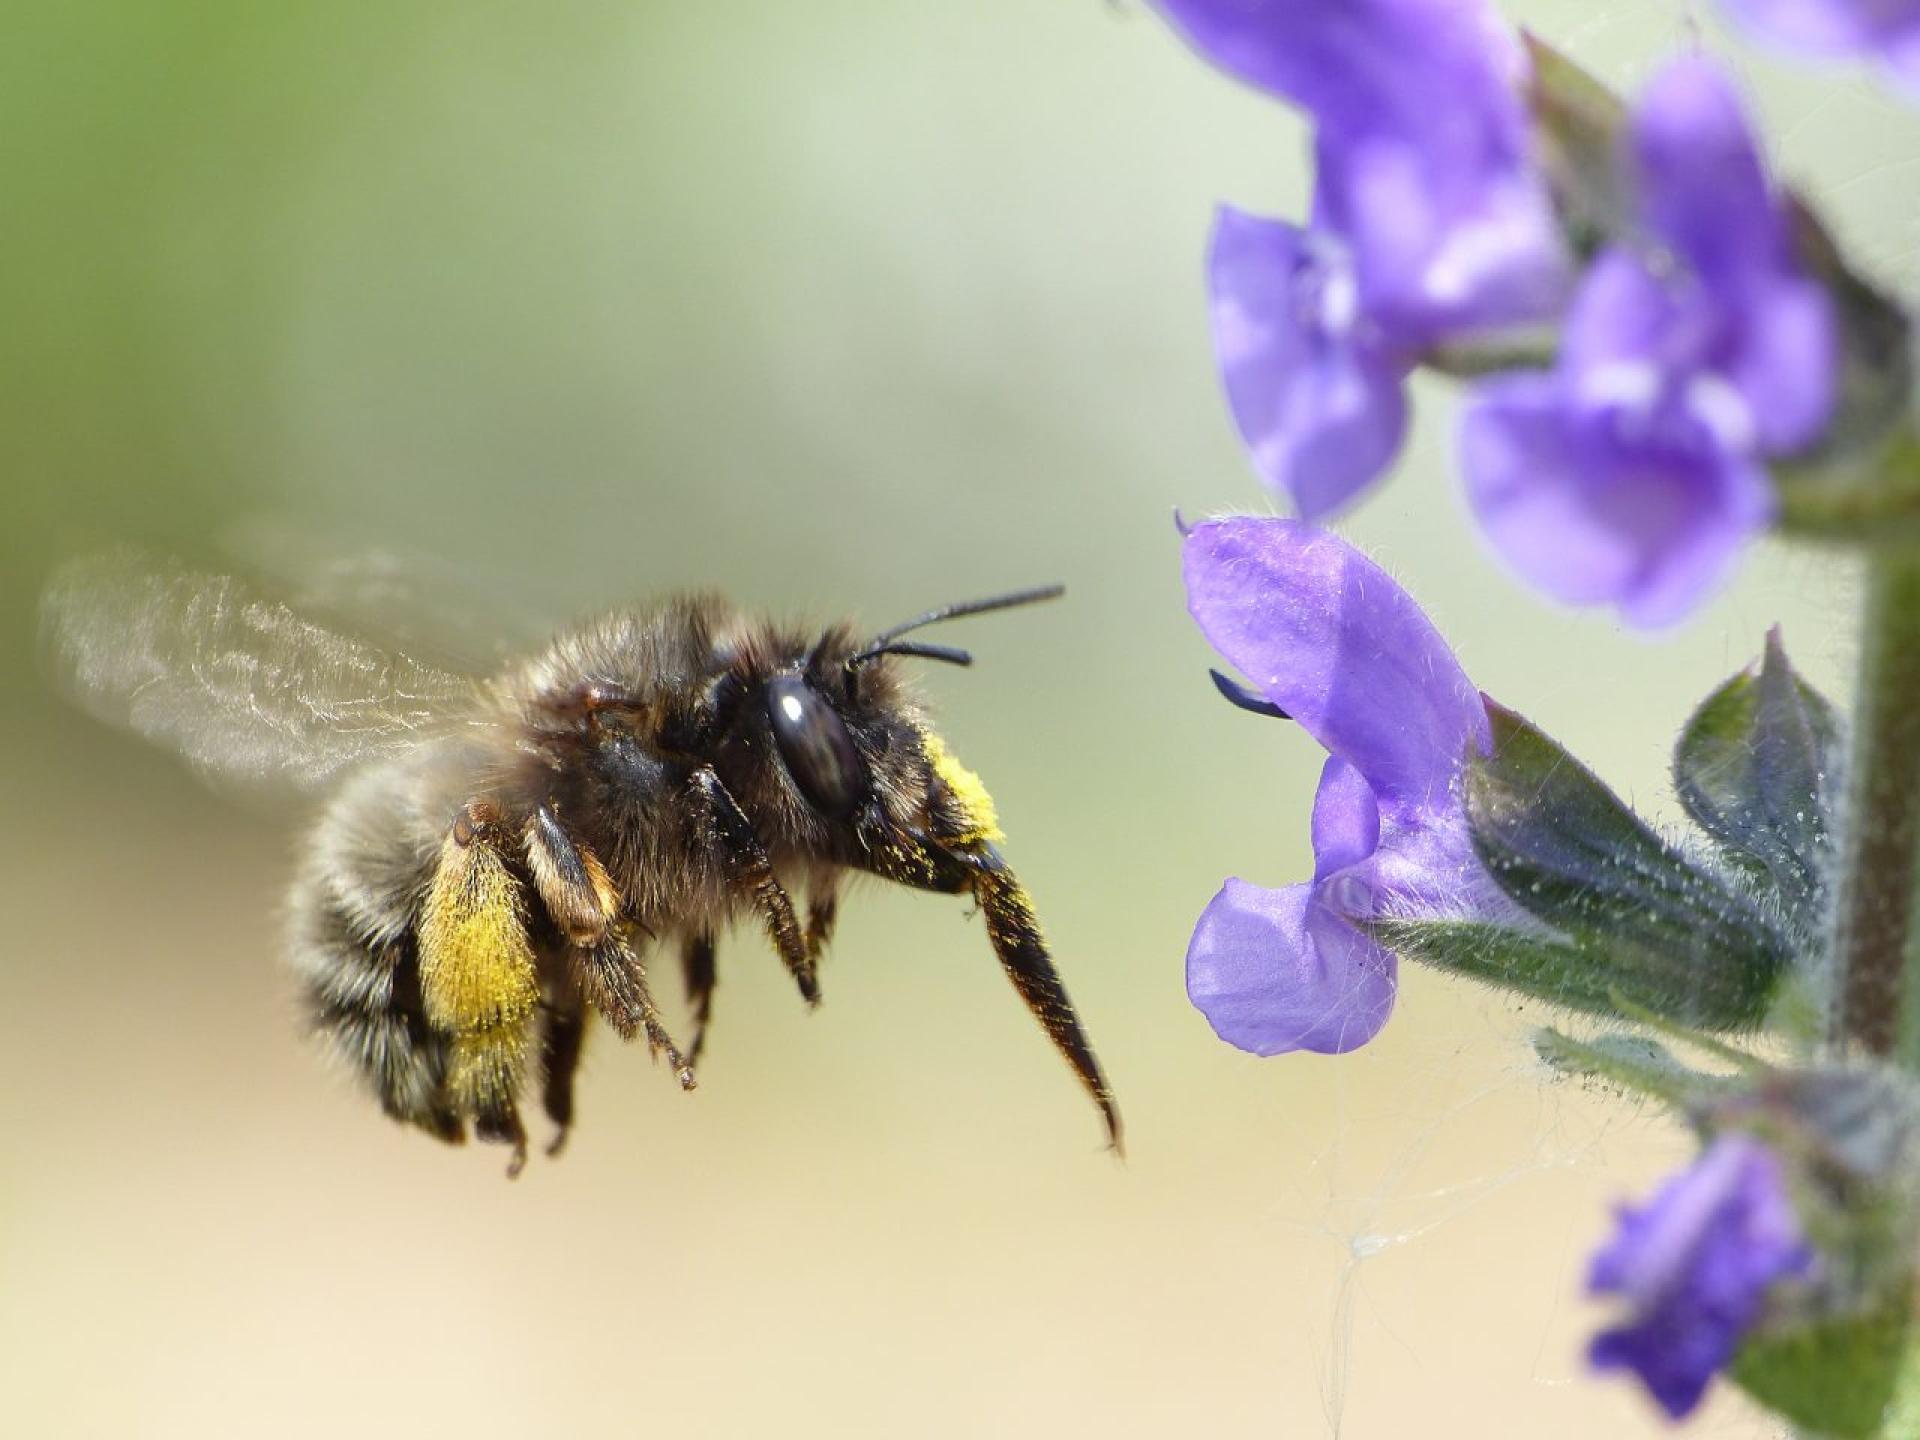 Fotowedstrijd Bijenweekend 